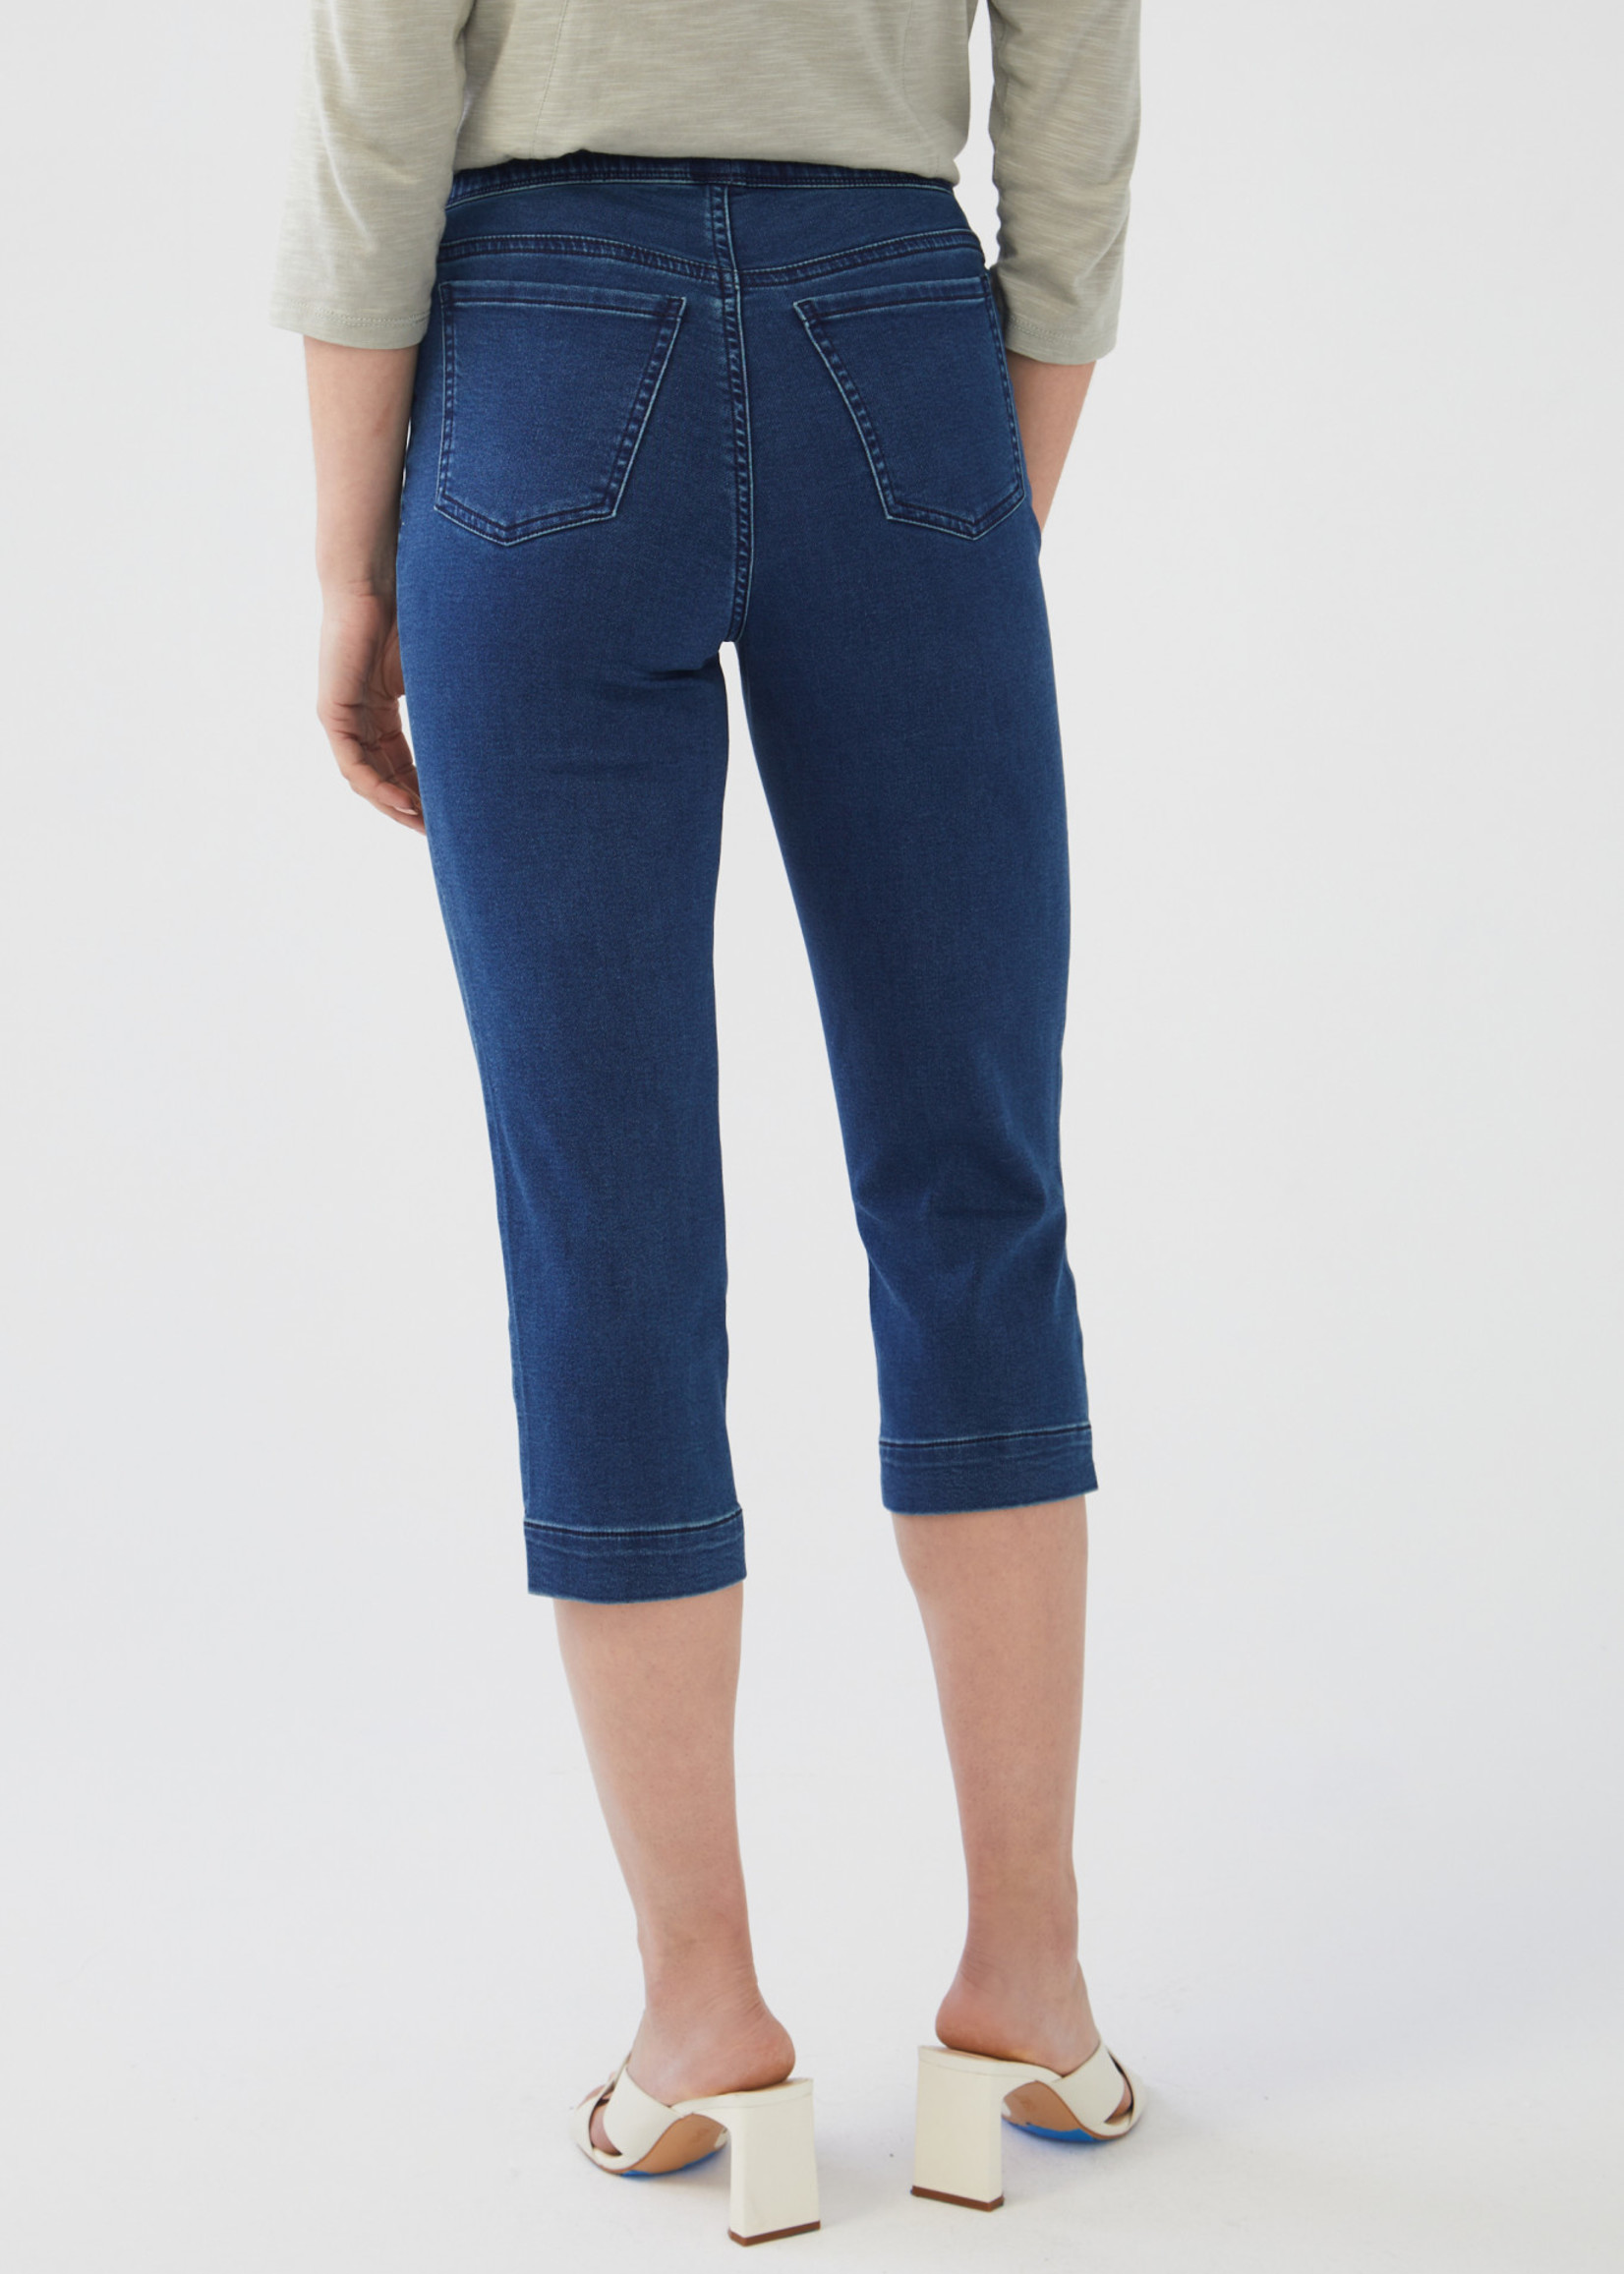 French Dressing Jeans FDJ Pull On Knit Denim Capri